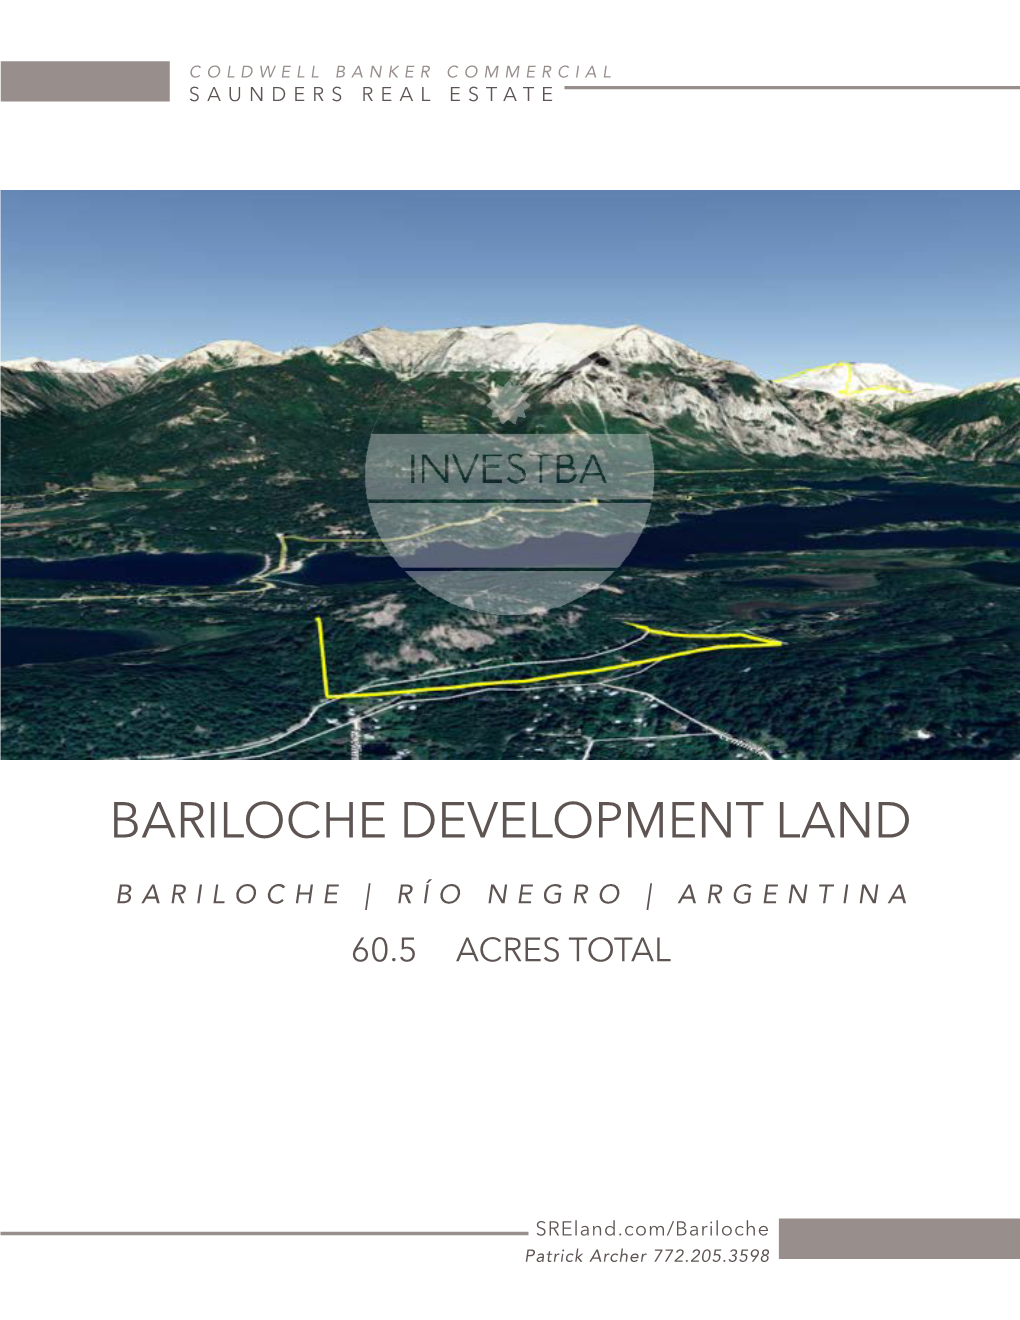 Bariloche Development Land